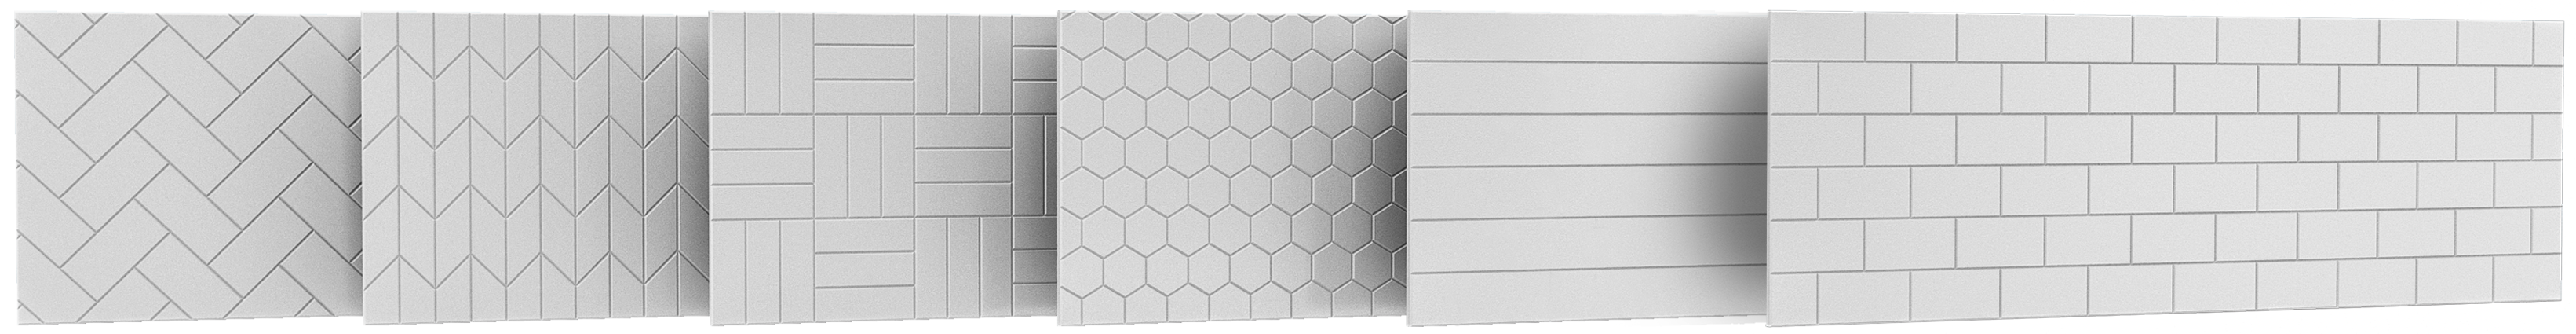 Tavolo splashback tile effects - hexagon, herringbone, basketweave, chevron, tongue and groove, subway tile